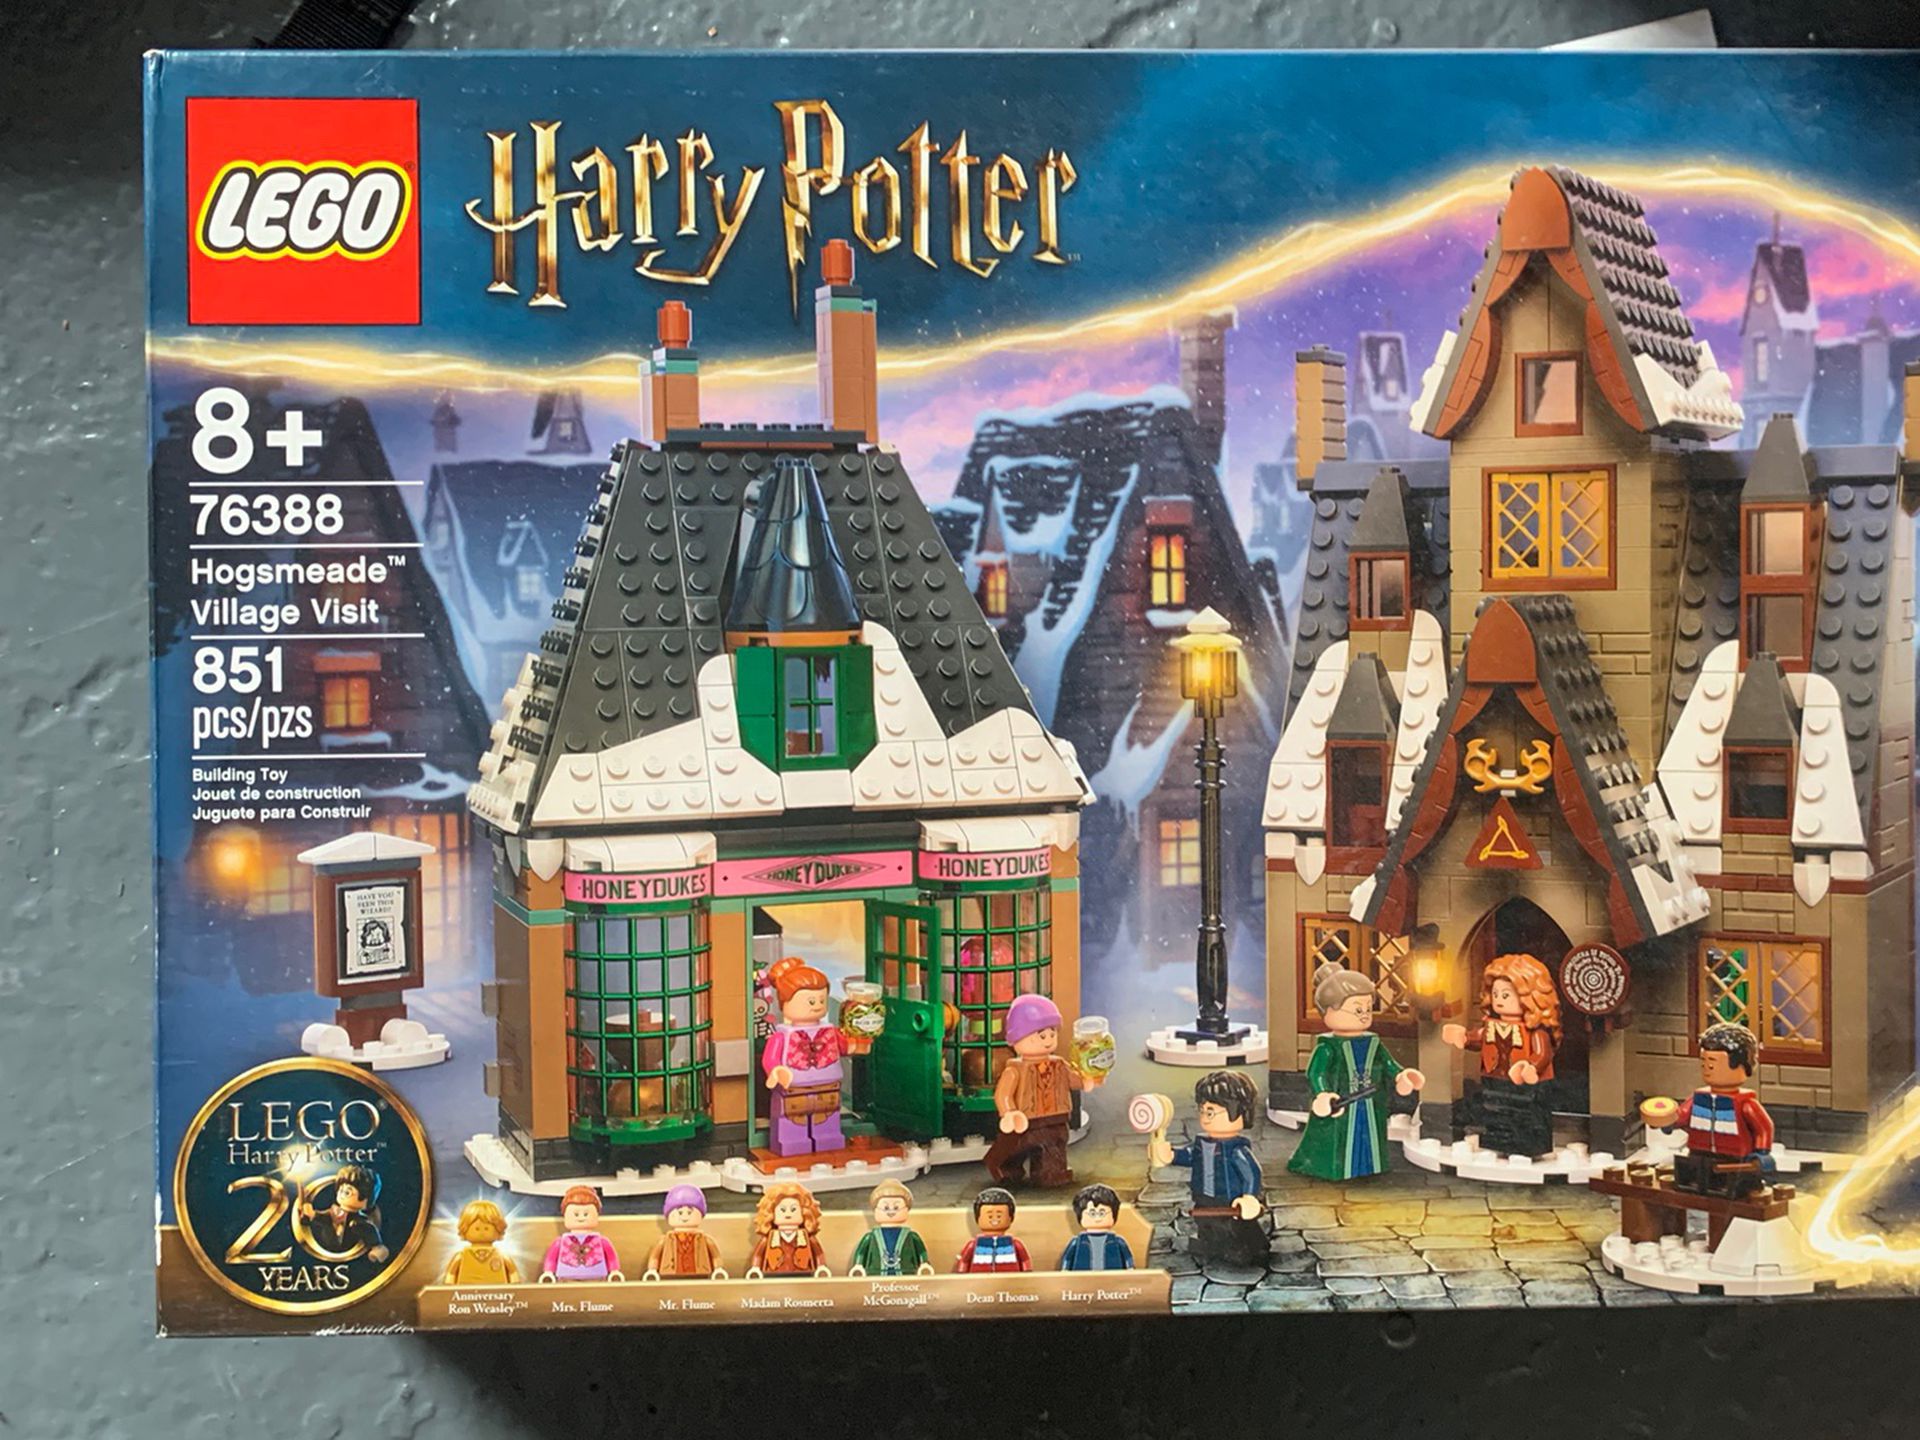 Lego Harry Potter 76388